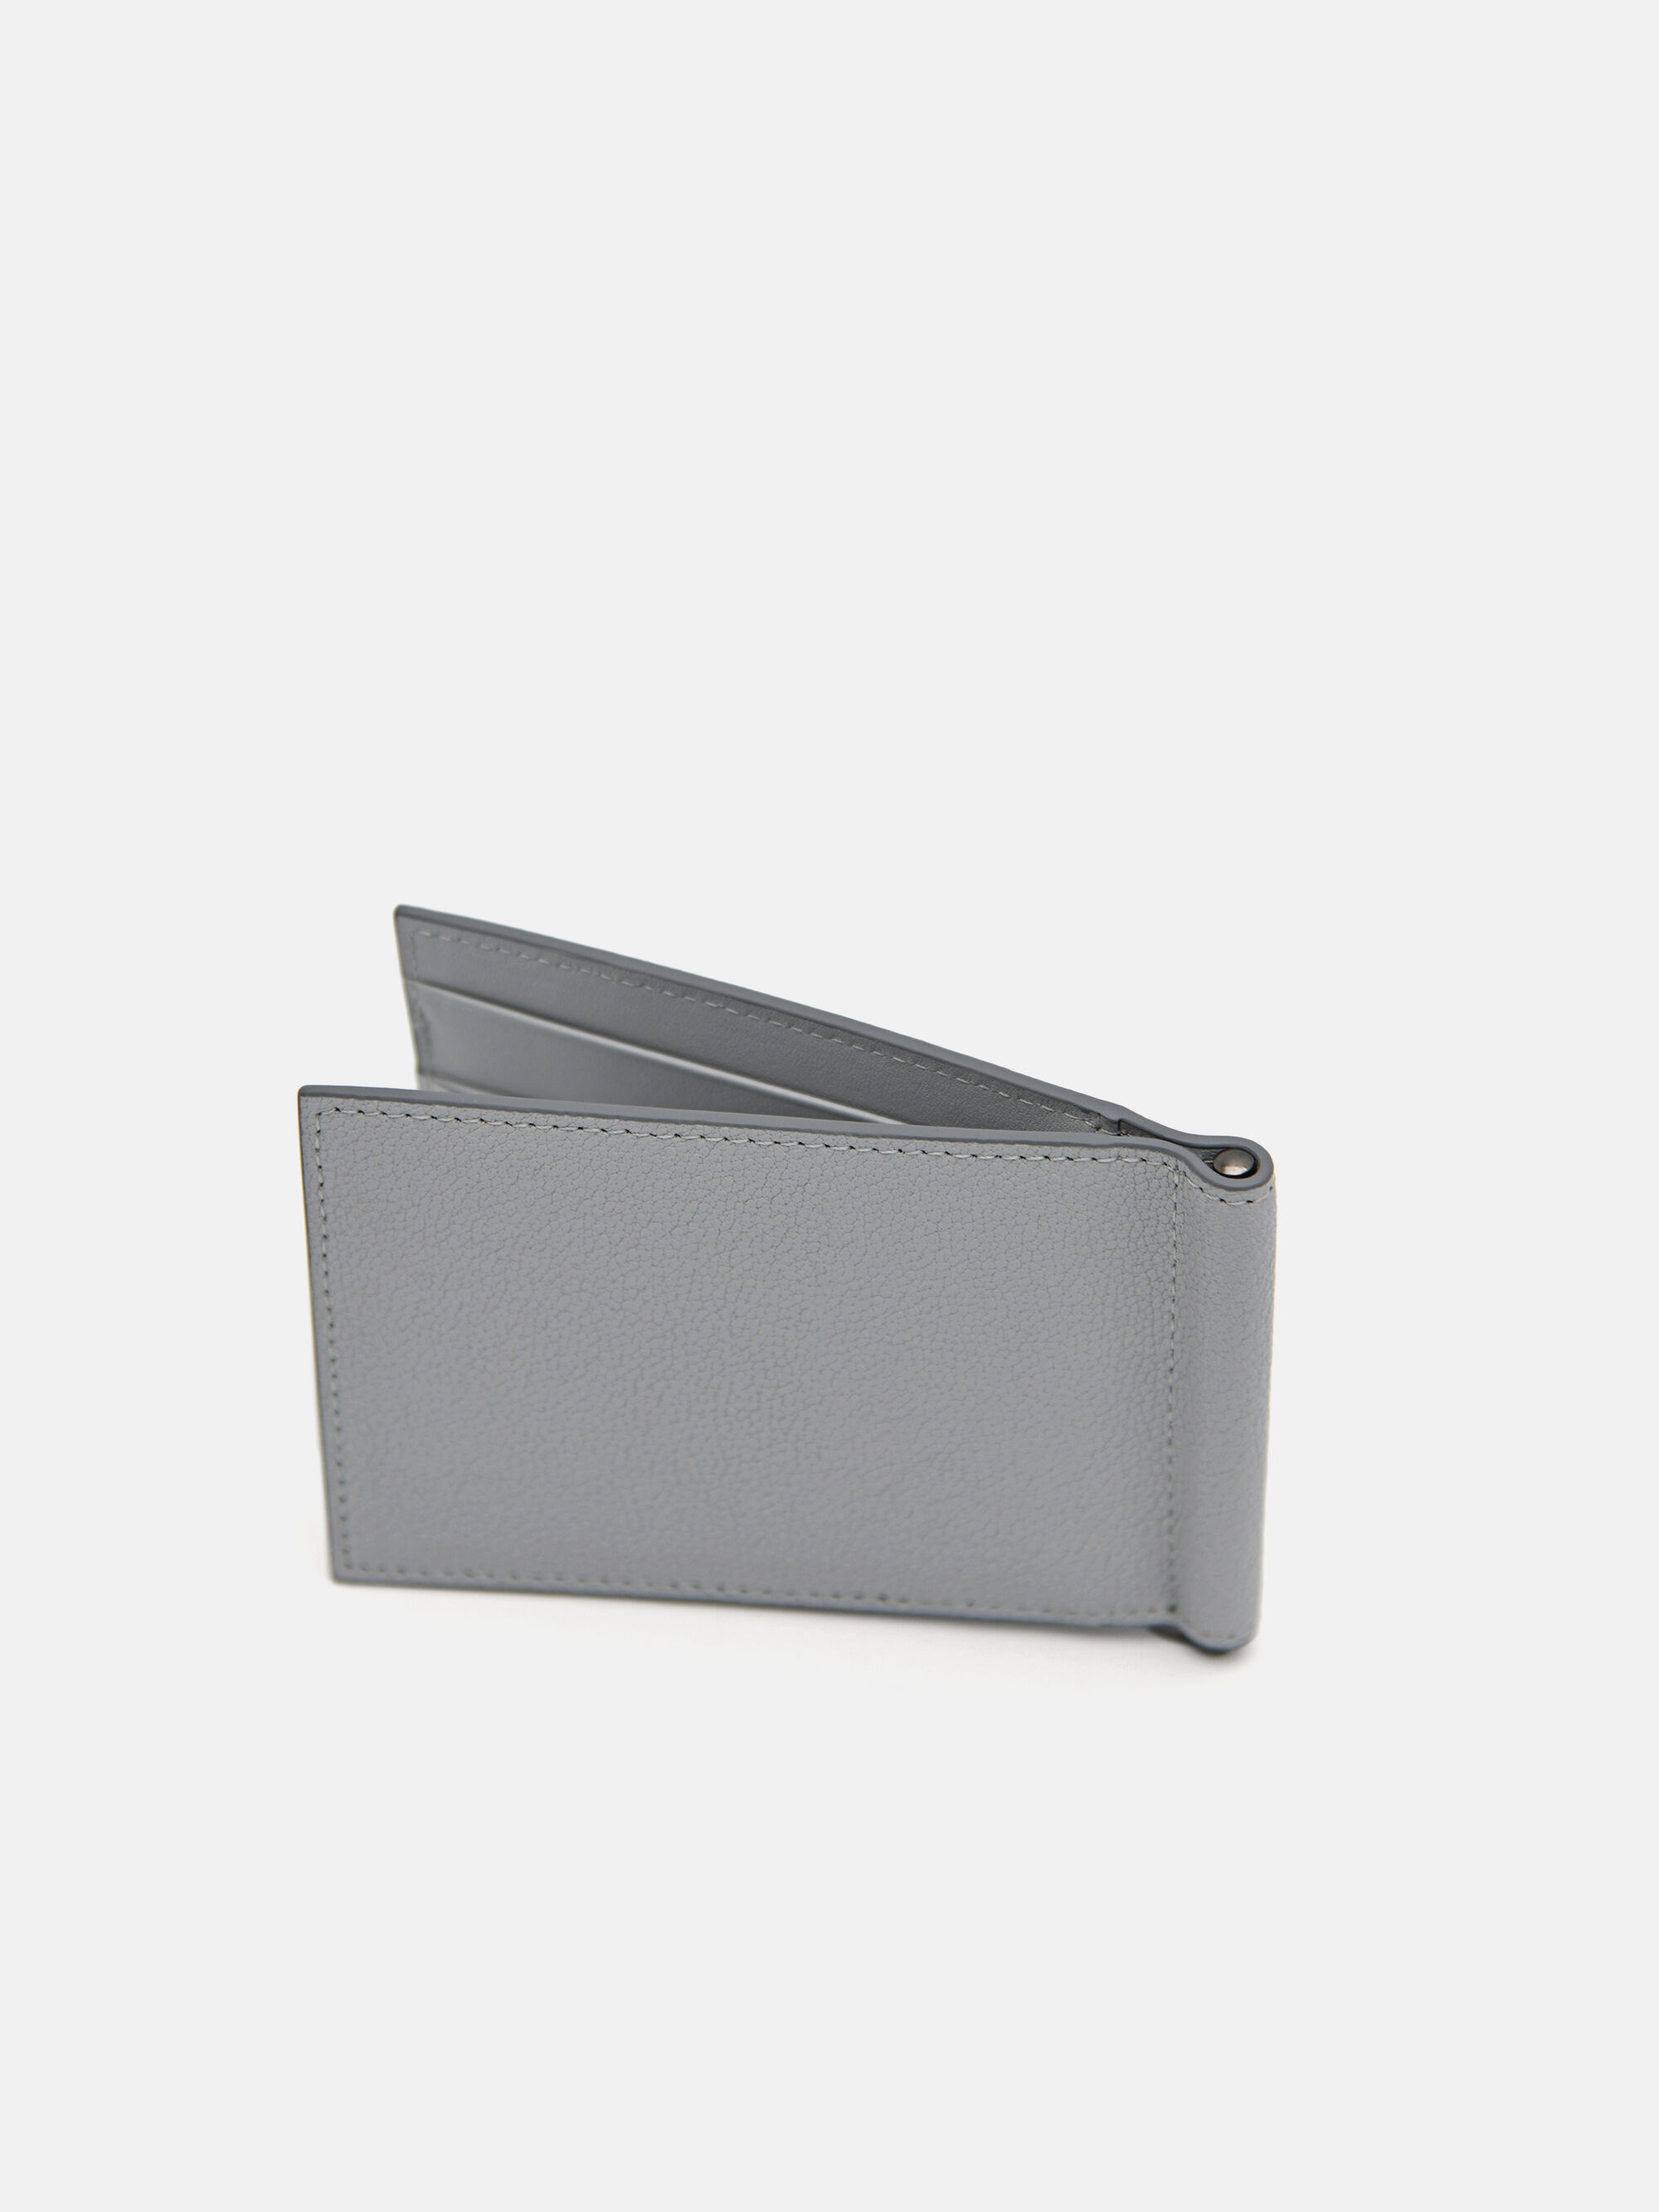 Leather Bi-Fold Card Holder with Money Clip, Light Grey